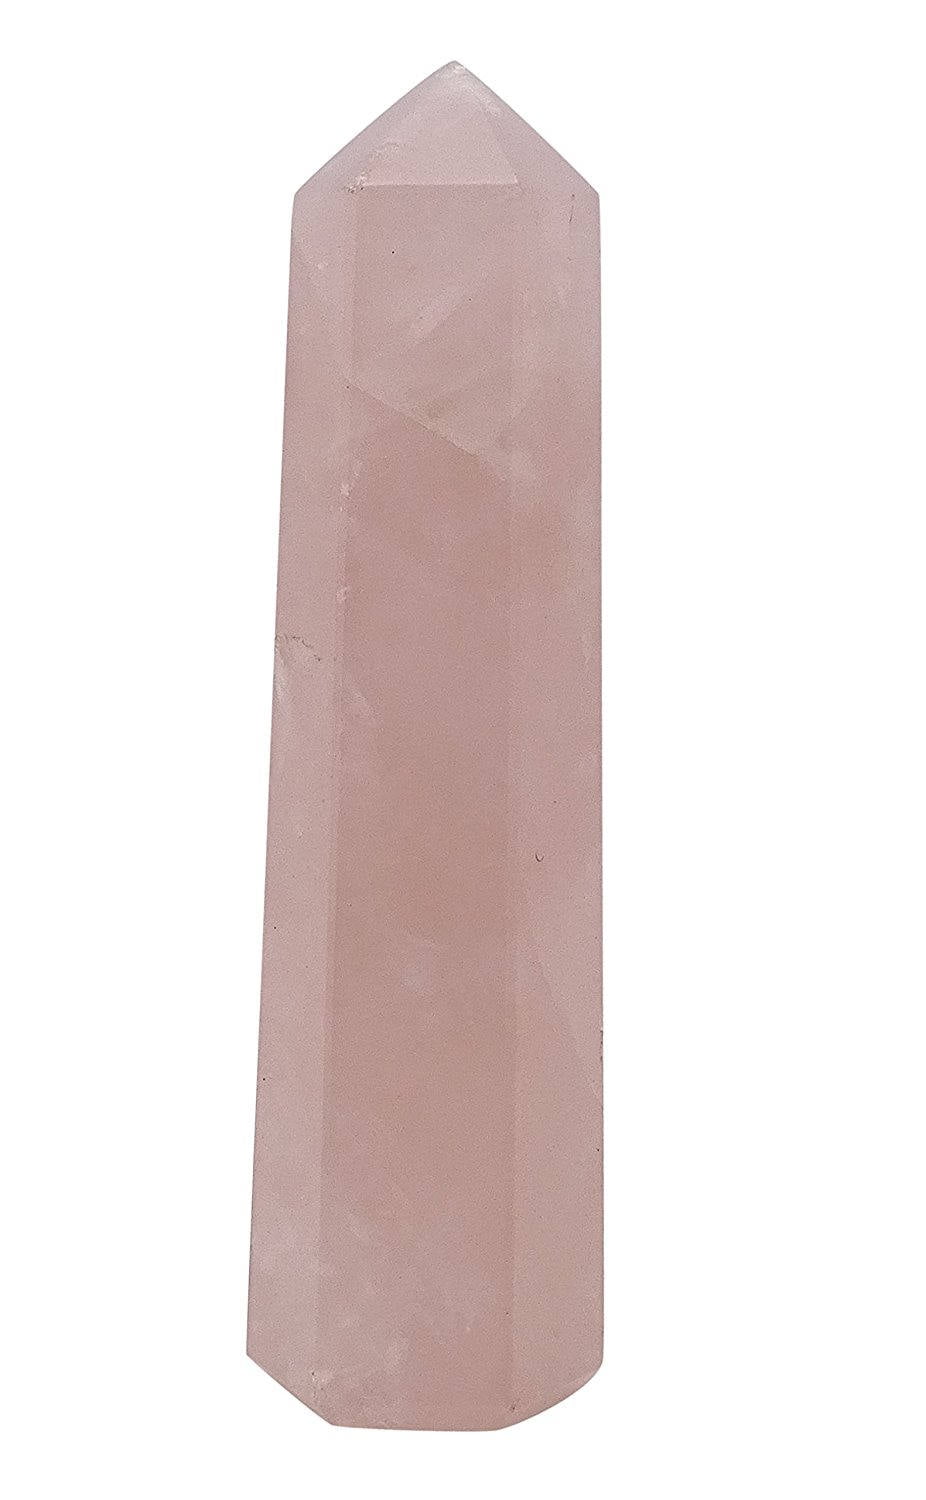 Reiki Gemstone Spiritual Healing Obelisk Tower Rose Quartz Stone Table Decor 